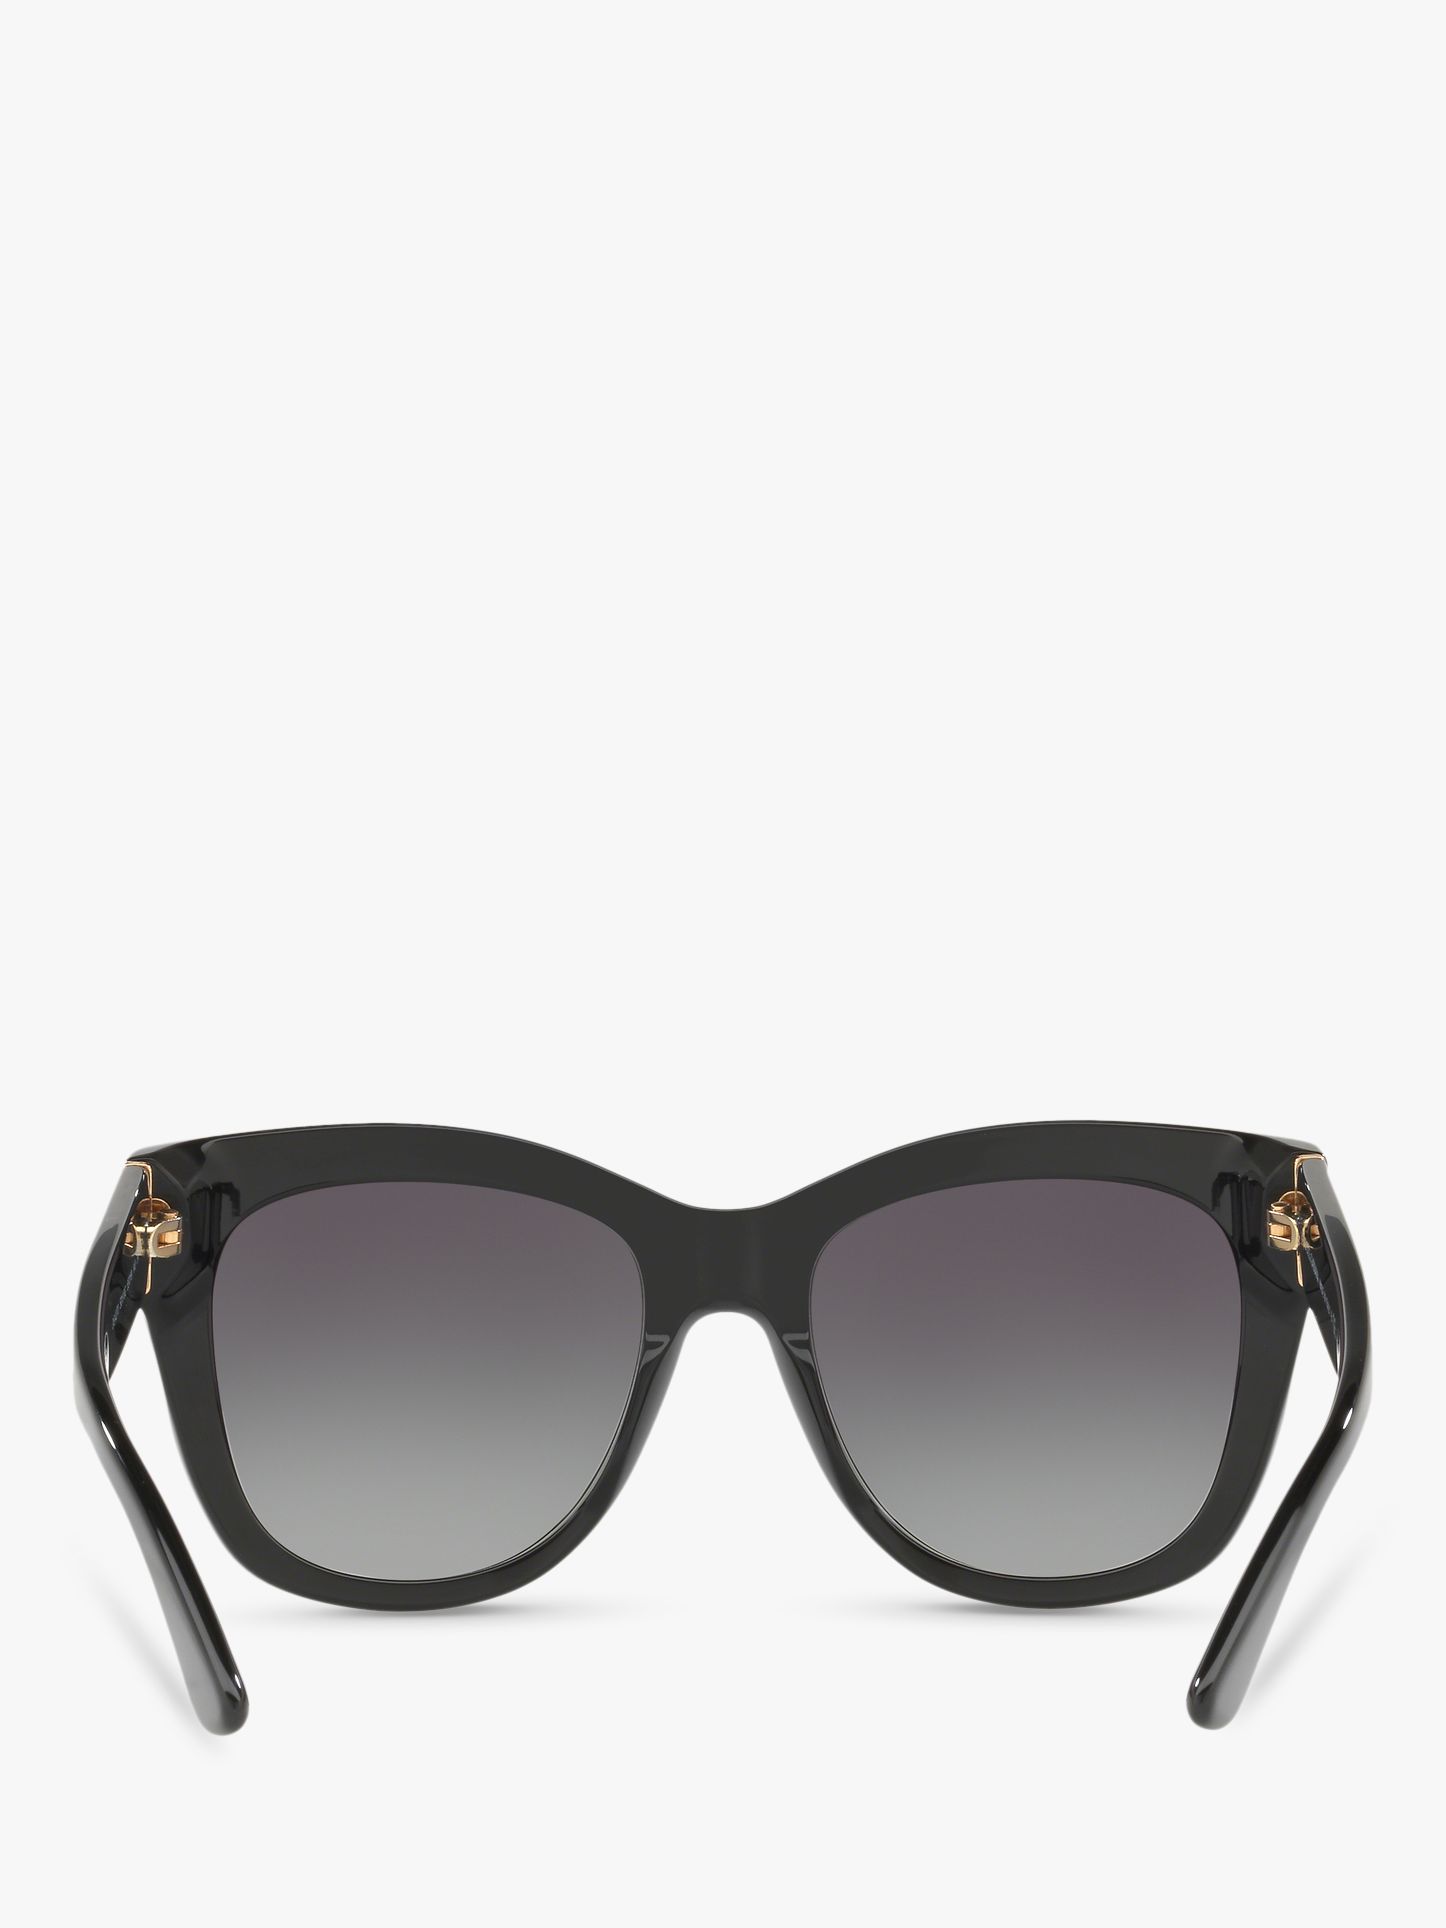 Dolce & Gabbana DG4270 Women's Square Sunglasses, Black/Grey Gradient ...